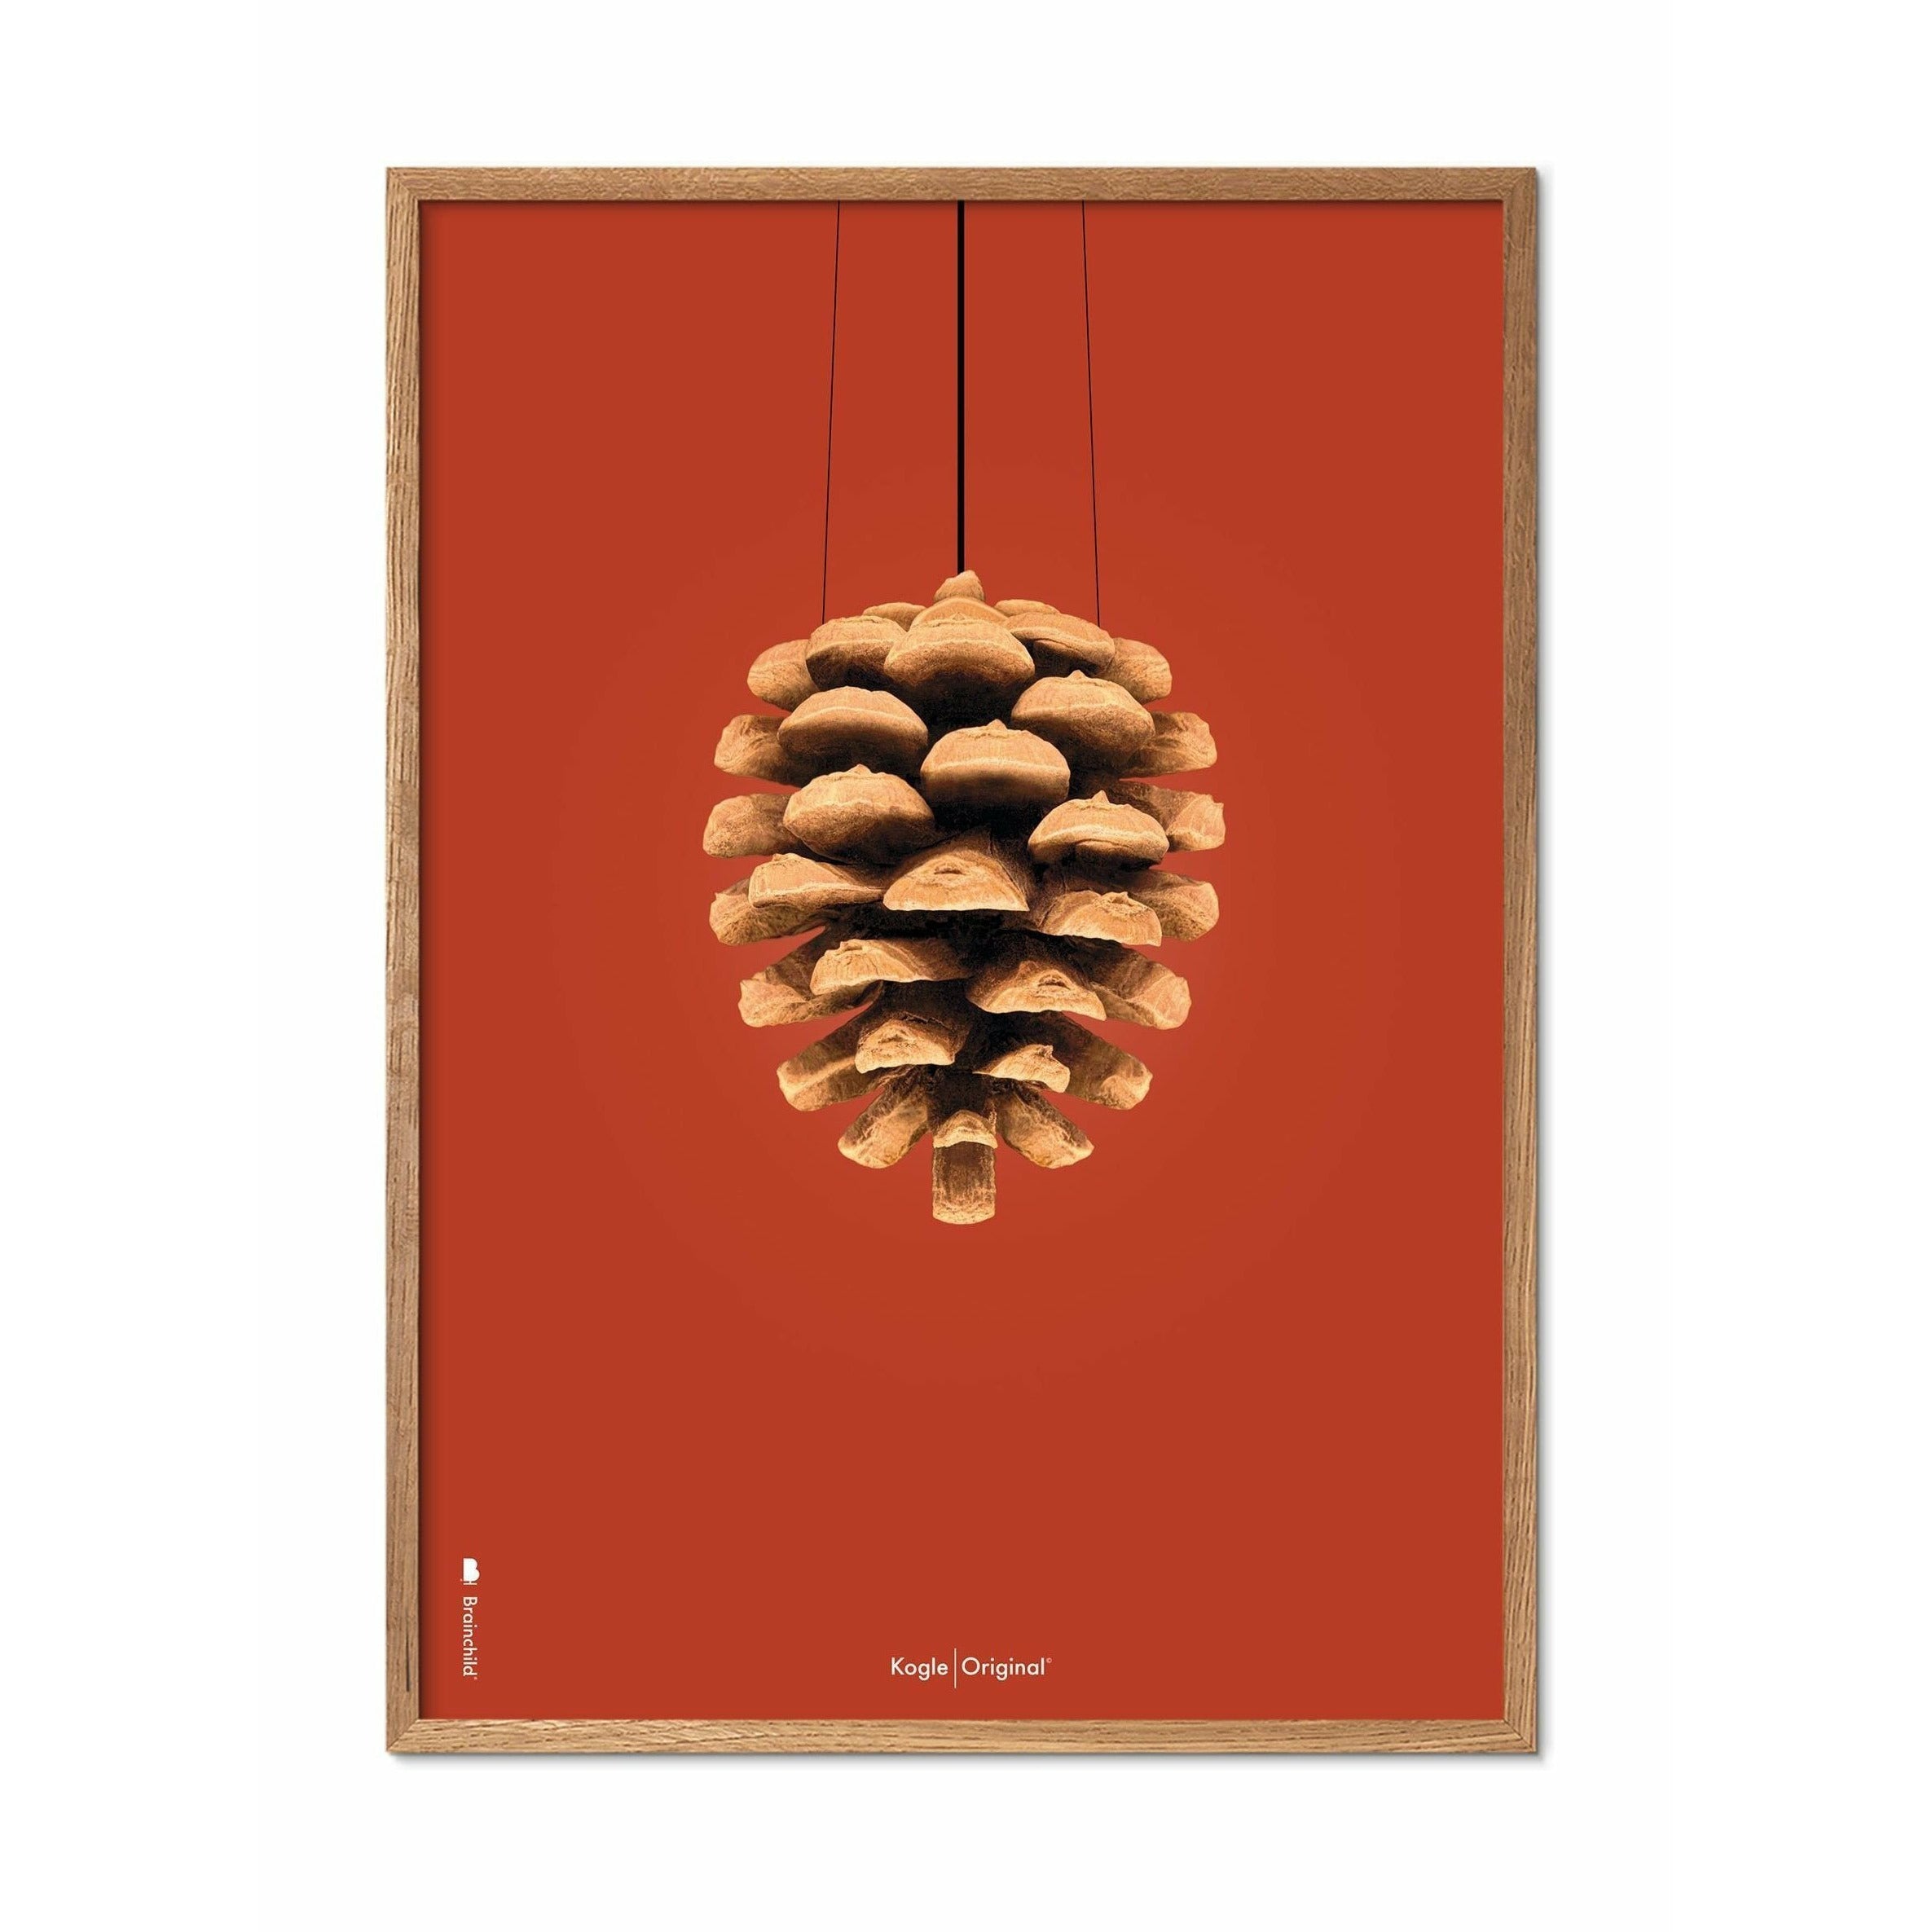 Brainchild Kogle Klassisk Plakat, Ramme I Lyst Træ 30X40 Cm, Rød Baggrund